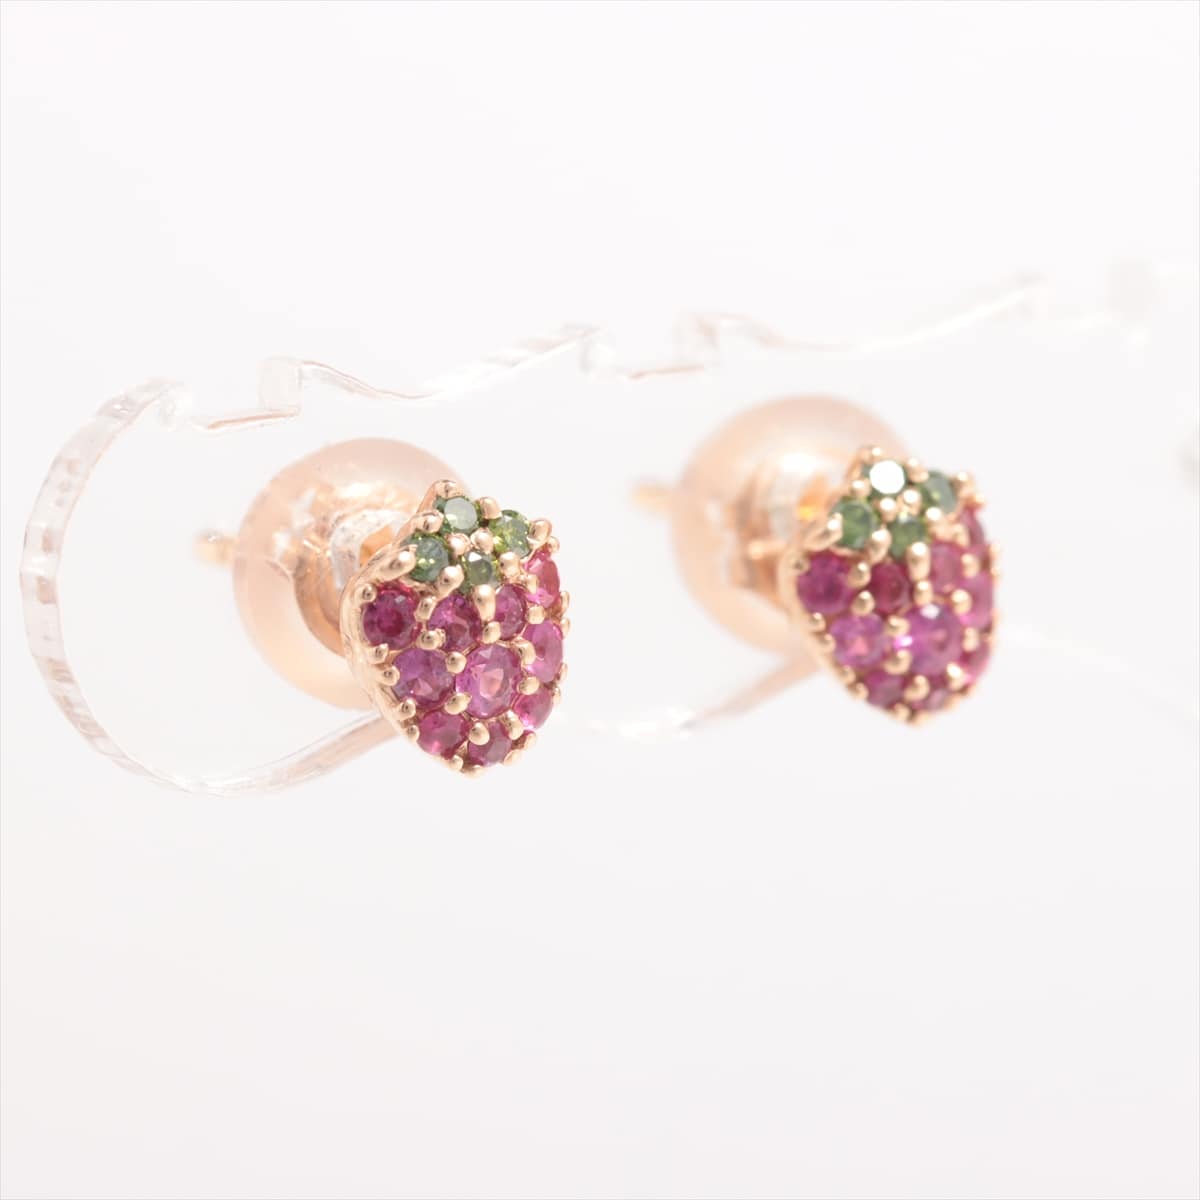 Ponte Vecchio Ruby Sapphire diamond Piercing jewelry K18PG Total 1.2g R0.03 0.03 S0.06 0.06 0.02 0.02